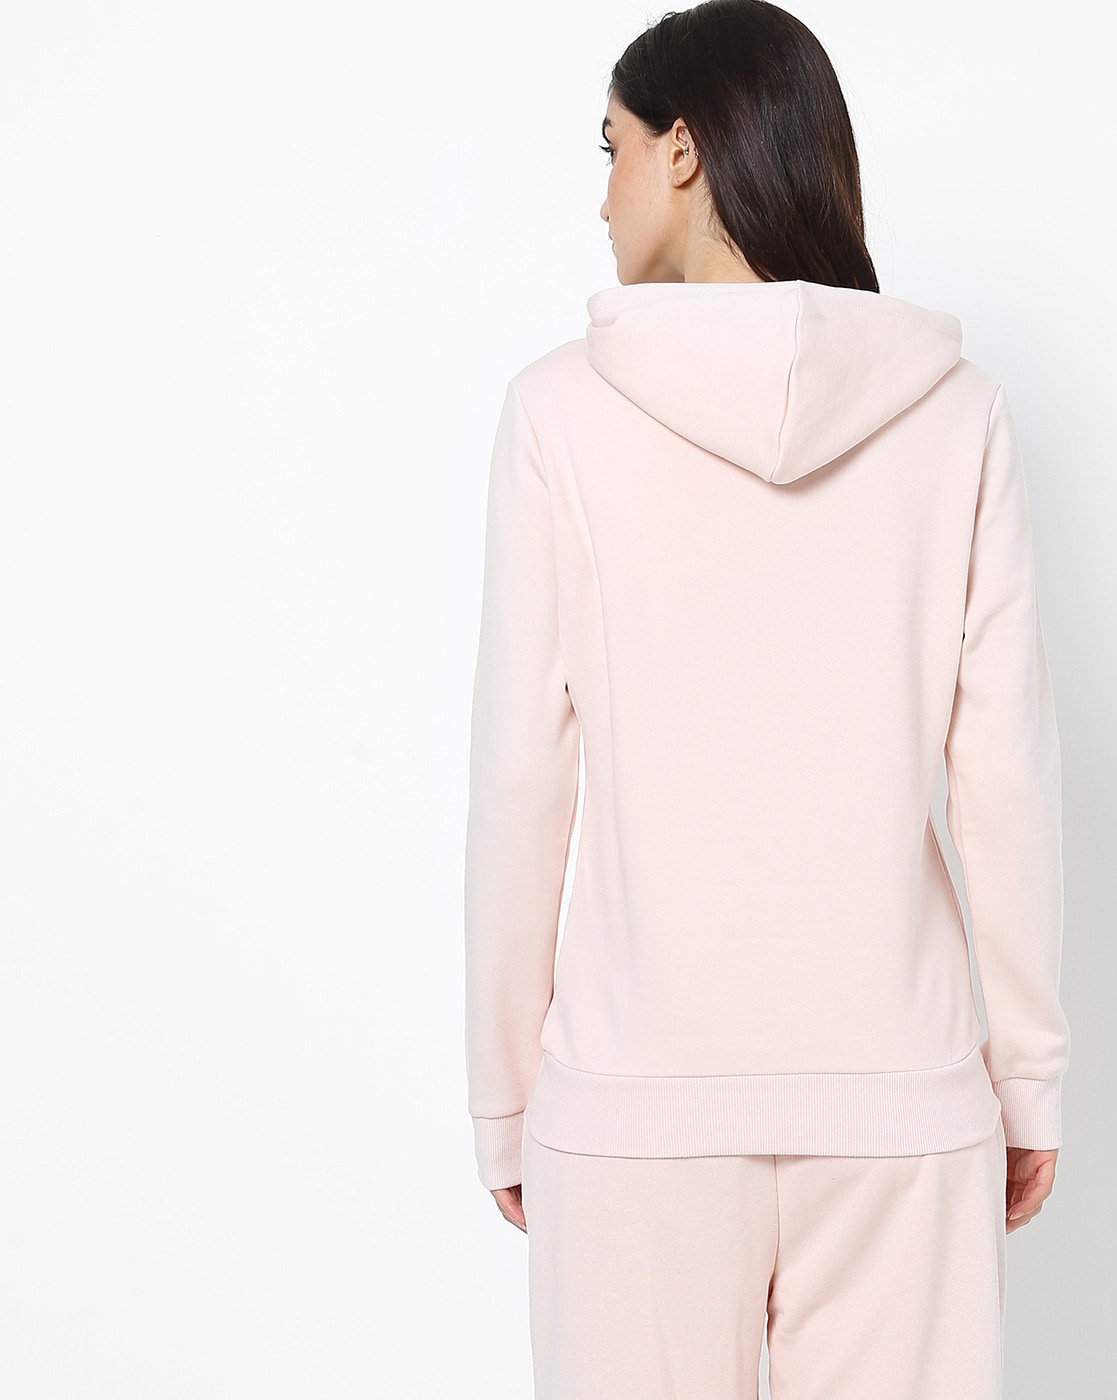 New Balance sweatshirt women's pink color buy on PRM